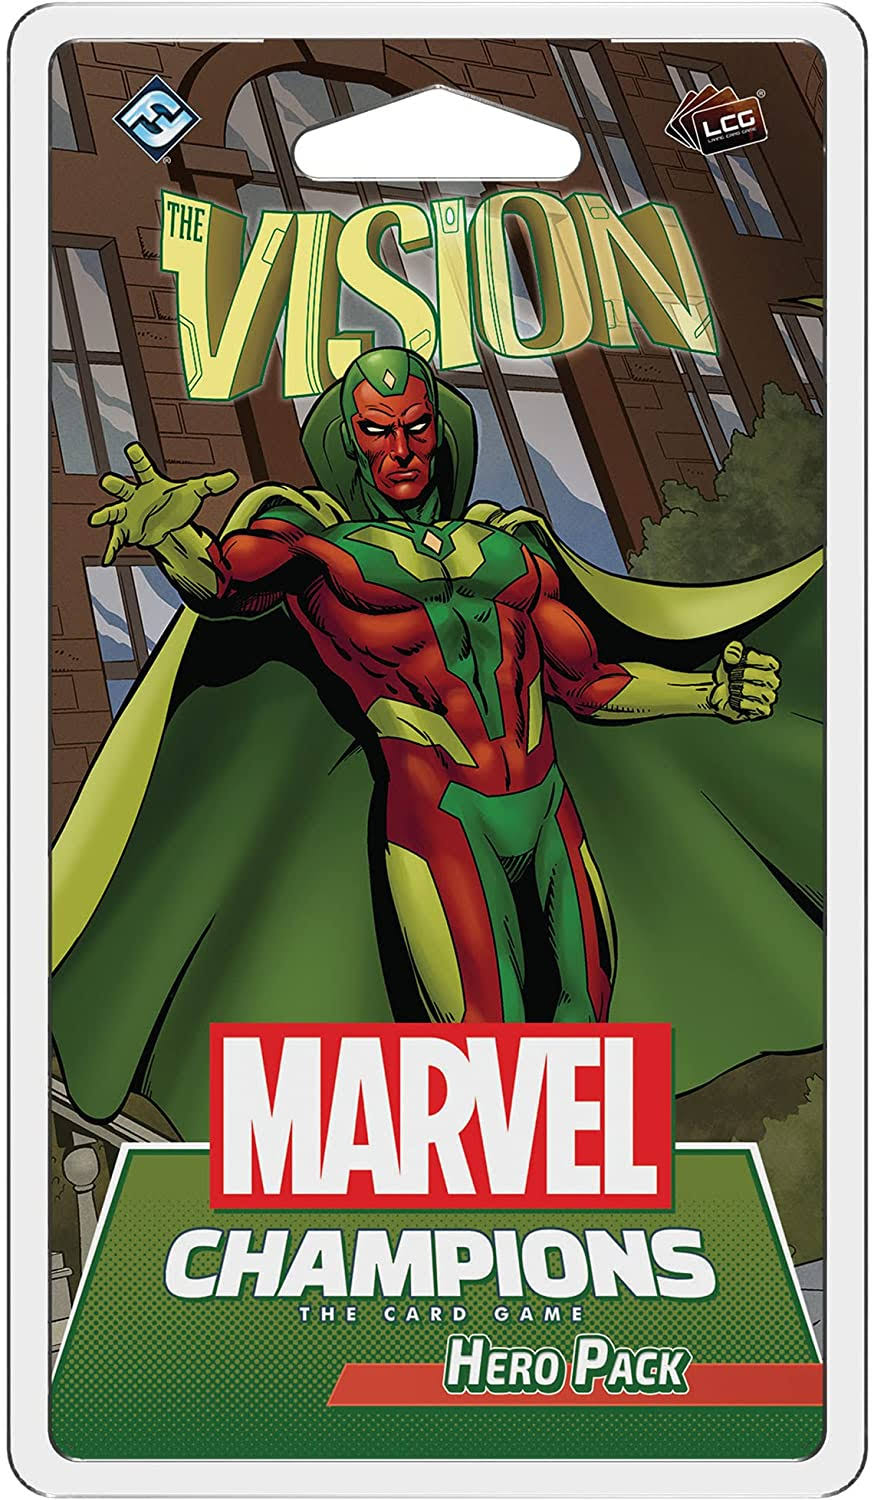 Marvel Champions - Vision Hero Pack